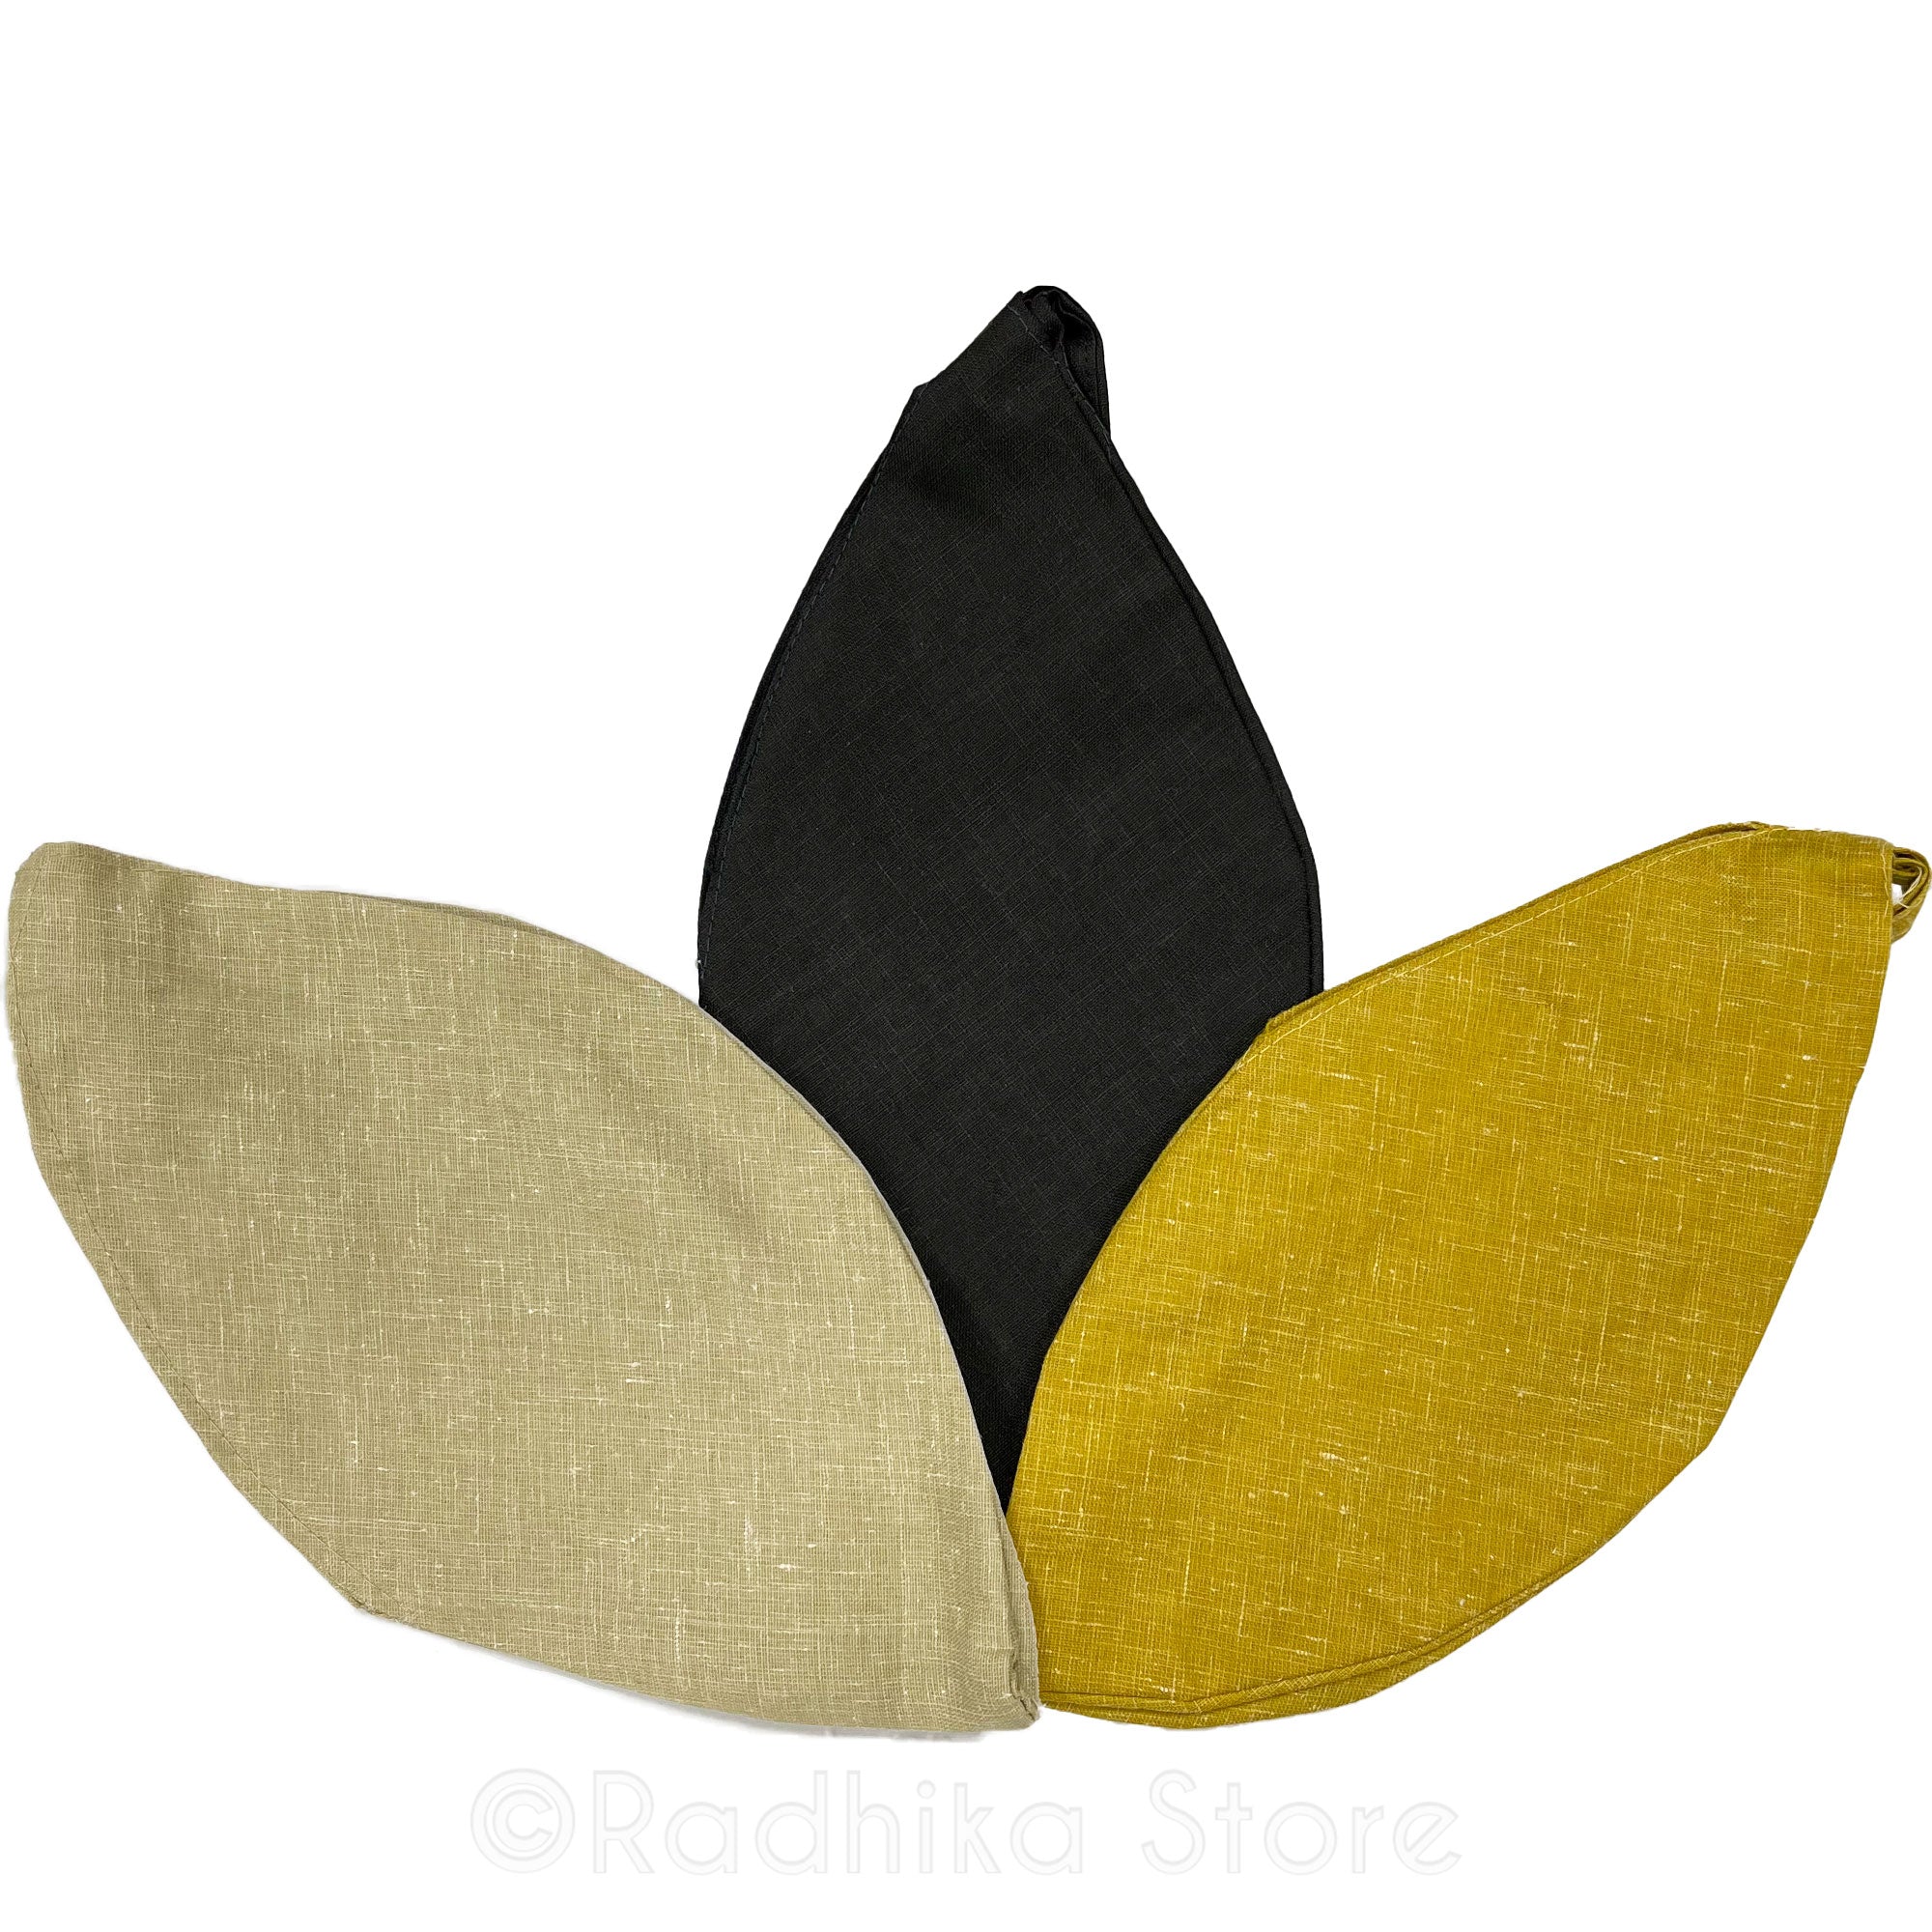 Beige - Black or Golden Wheat - Natural Jute - Bead Bags